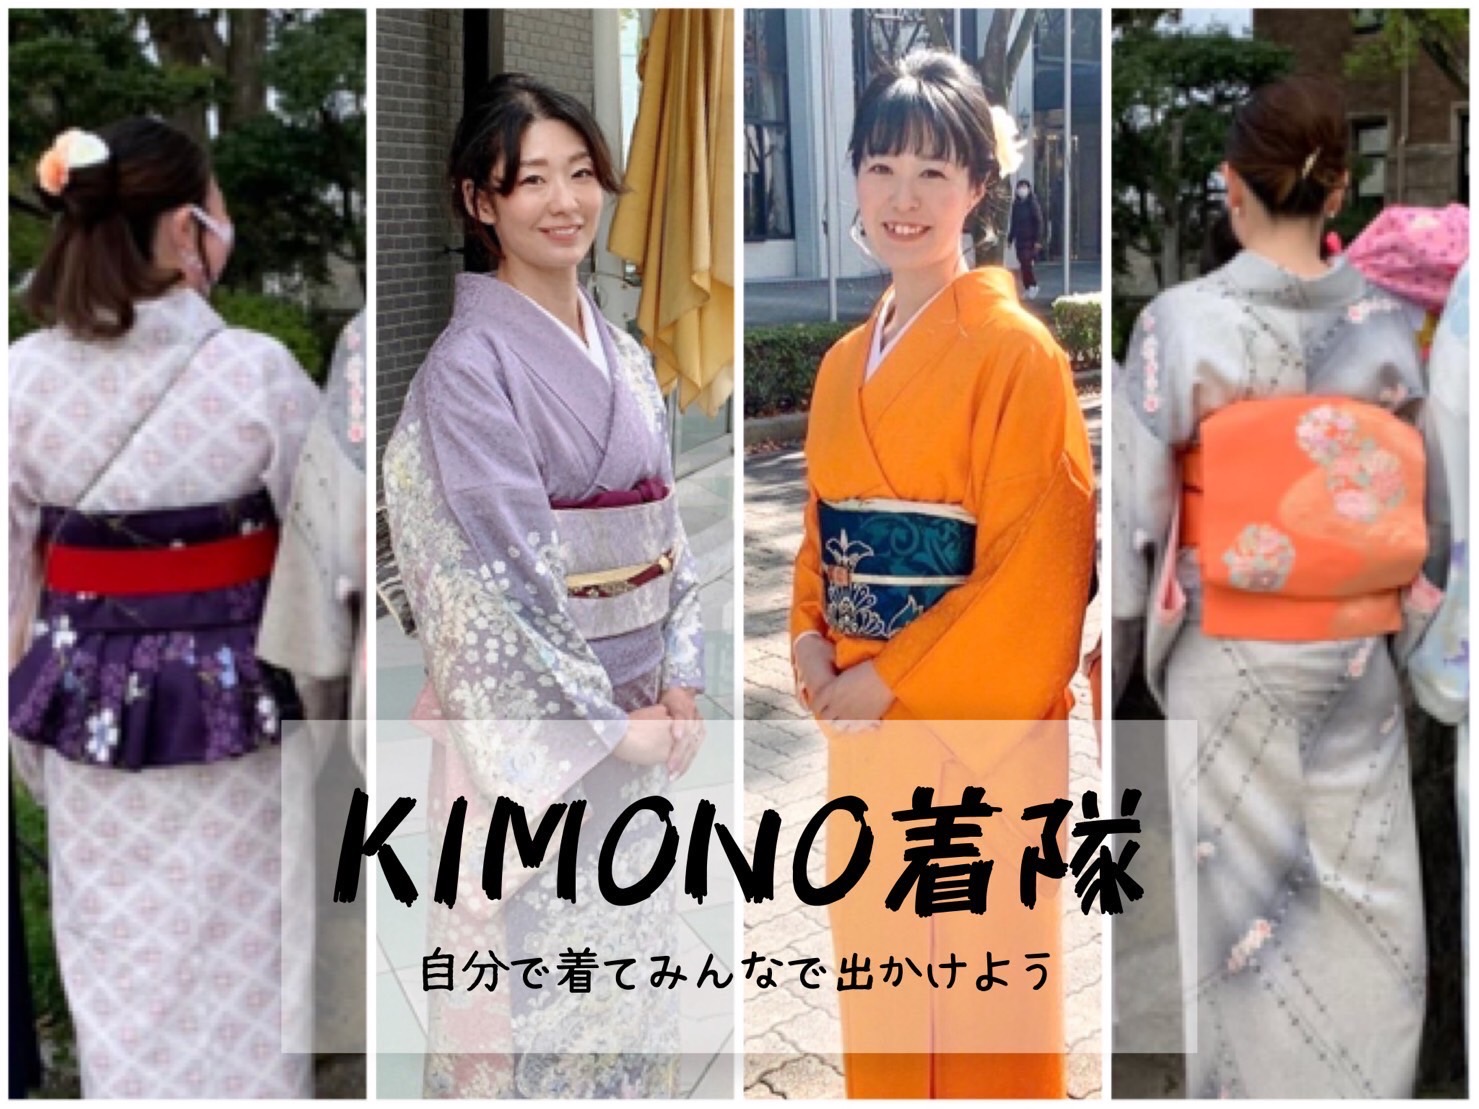 KIMONO着隊の着物の練習会